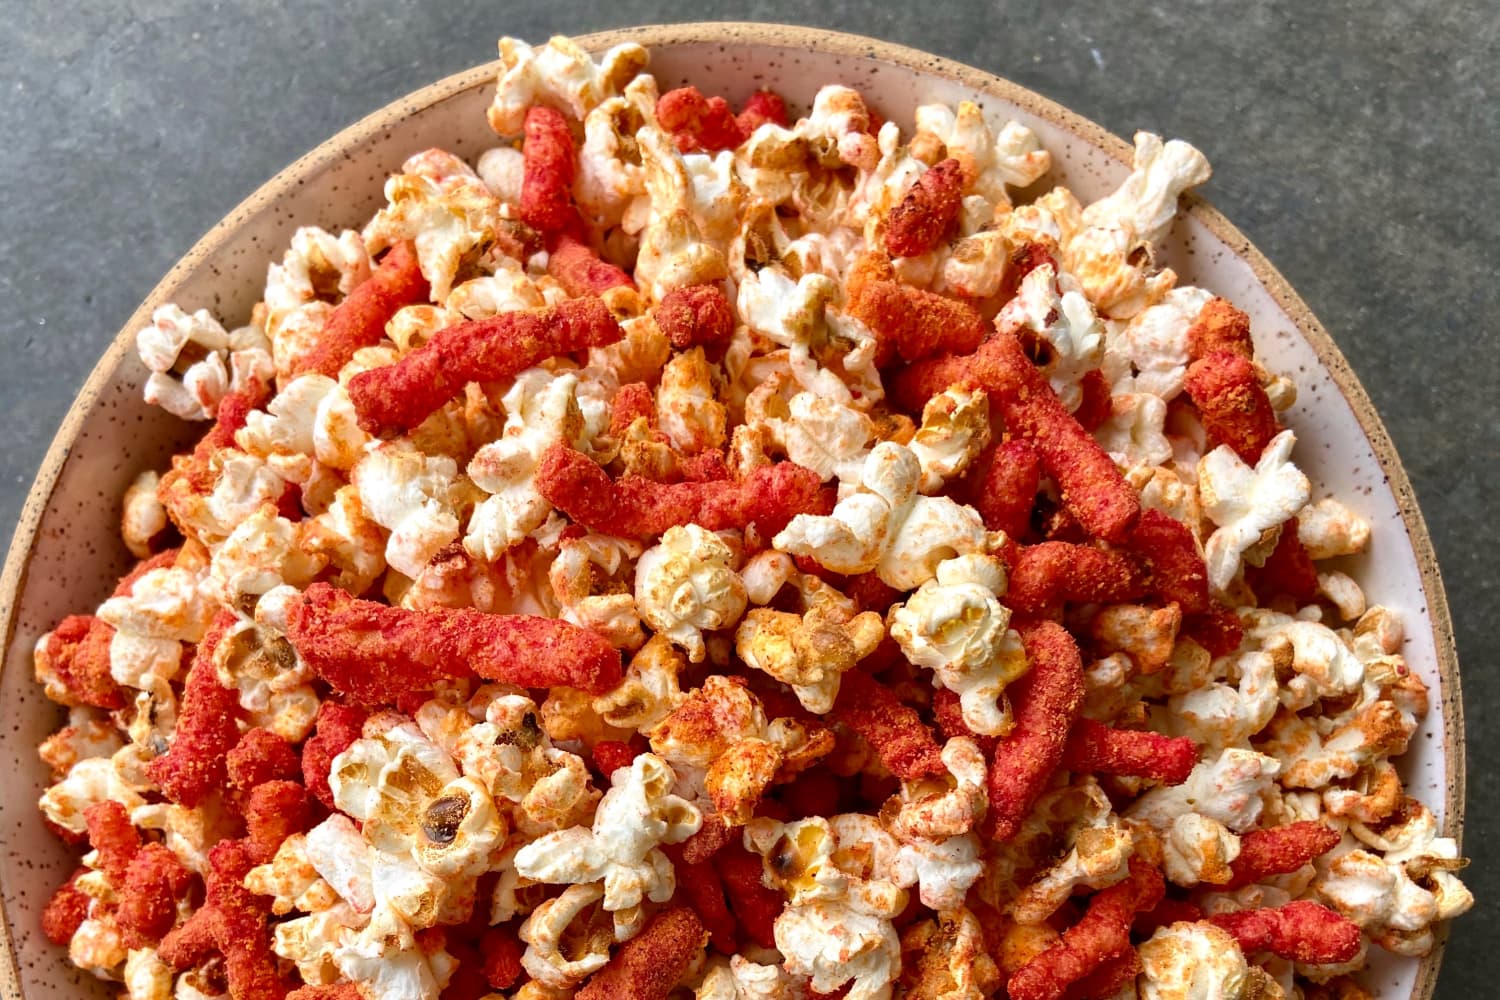 Spicy-Sweet Popcorn Snacks : Cheetos Flamin' Hot Cinnamon Sugar